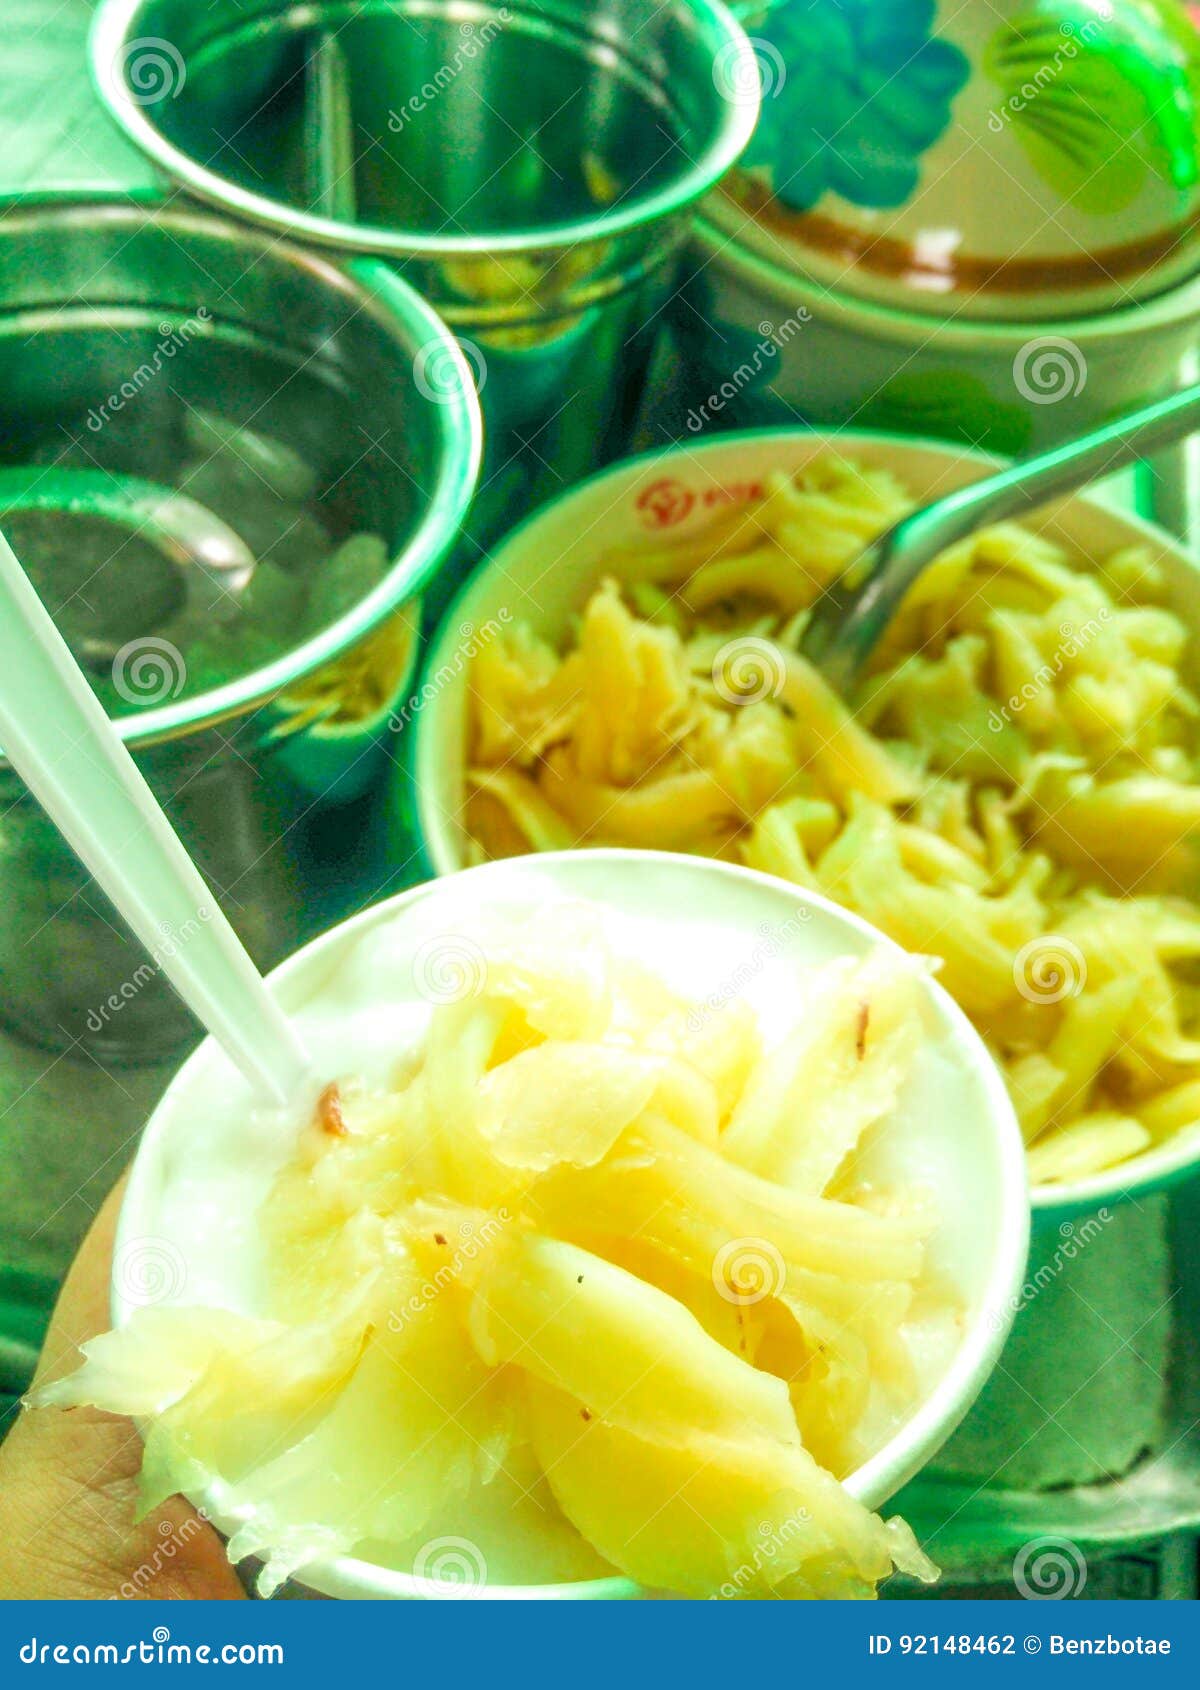 Coconut ice cream stock photo. Image of green, fresh - 92148462